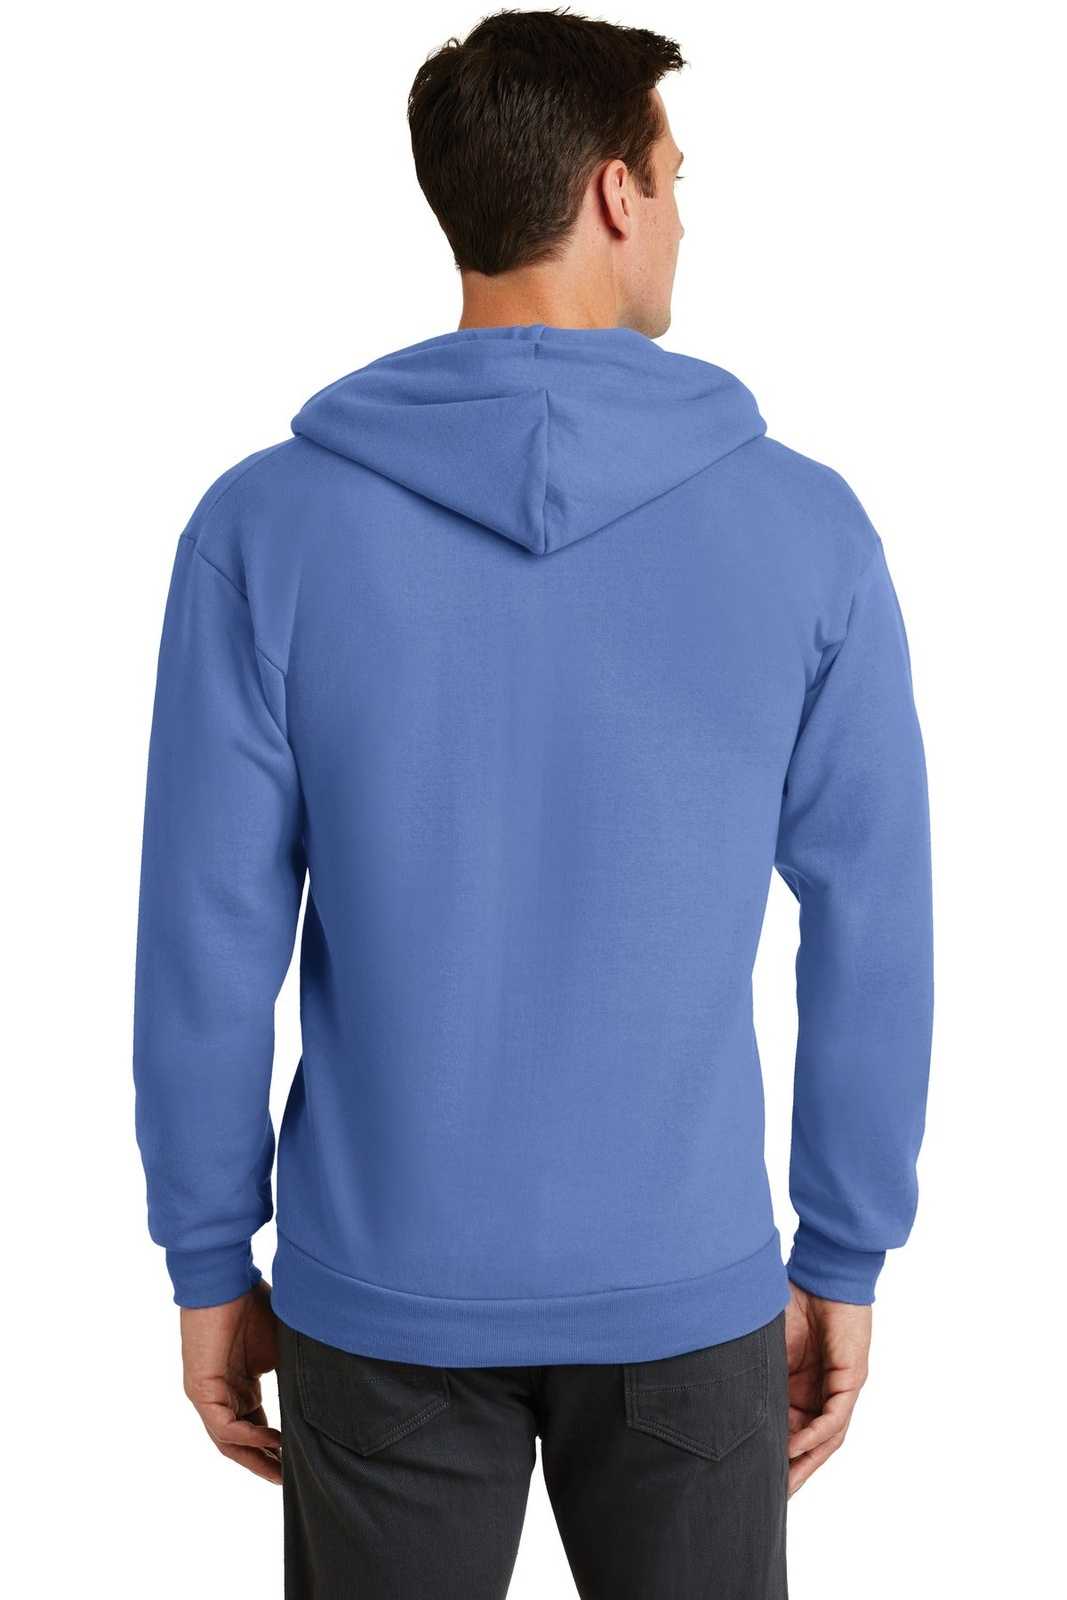 Port & Company PC78ZH Core Fleece Full-Zip Hooded Sweatshirt - Carolina Blue - HIT a Double - 1